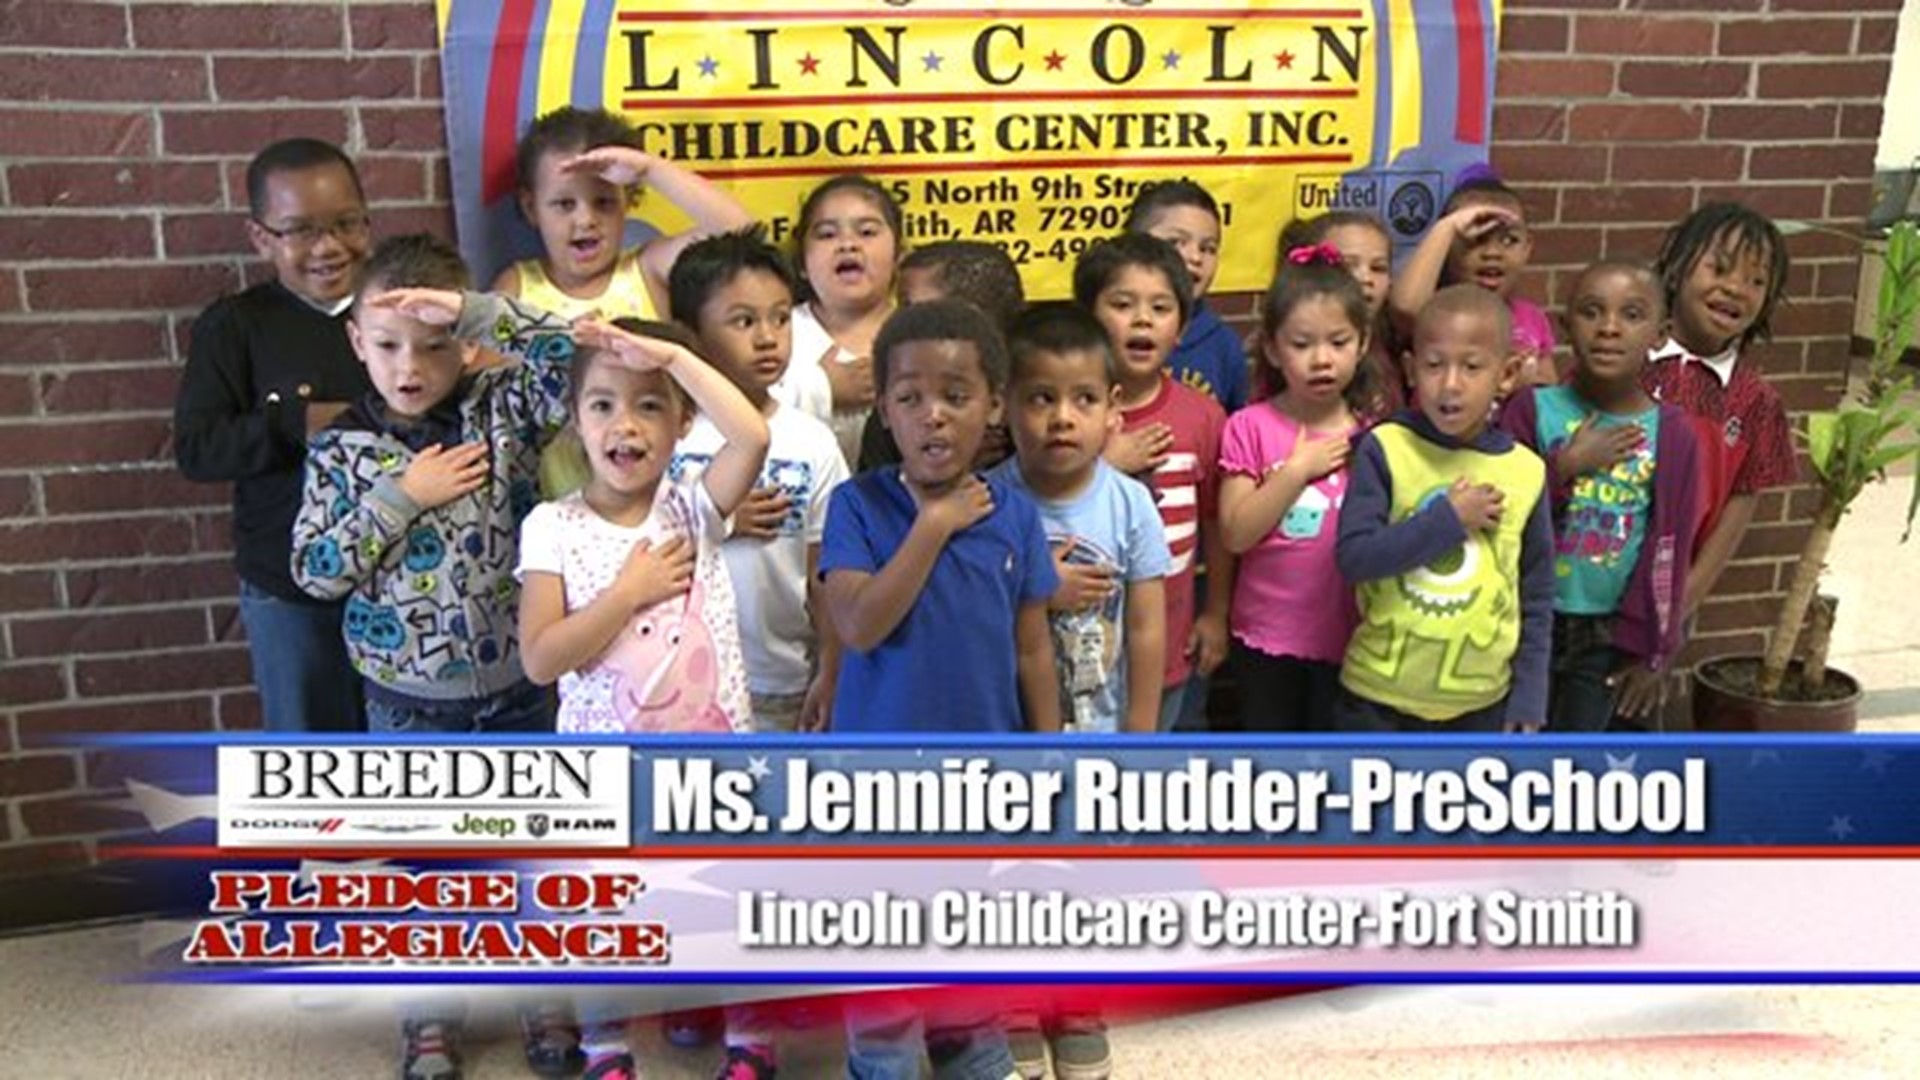 Lincoln Childcare Center - Fort Smith, Ms. Rudder - Preschool